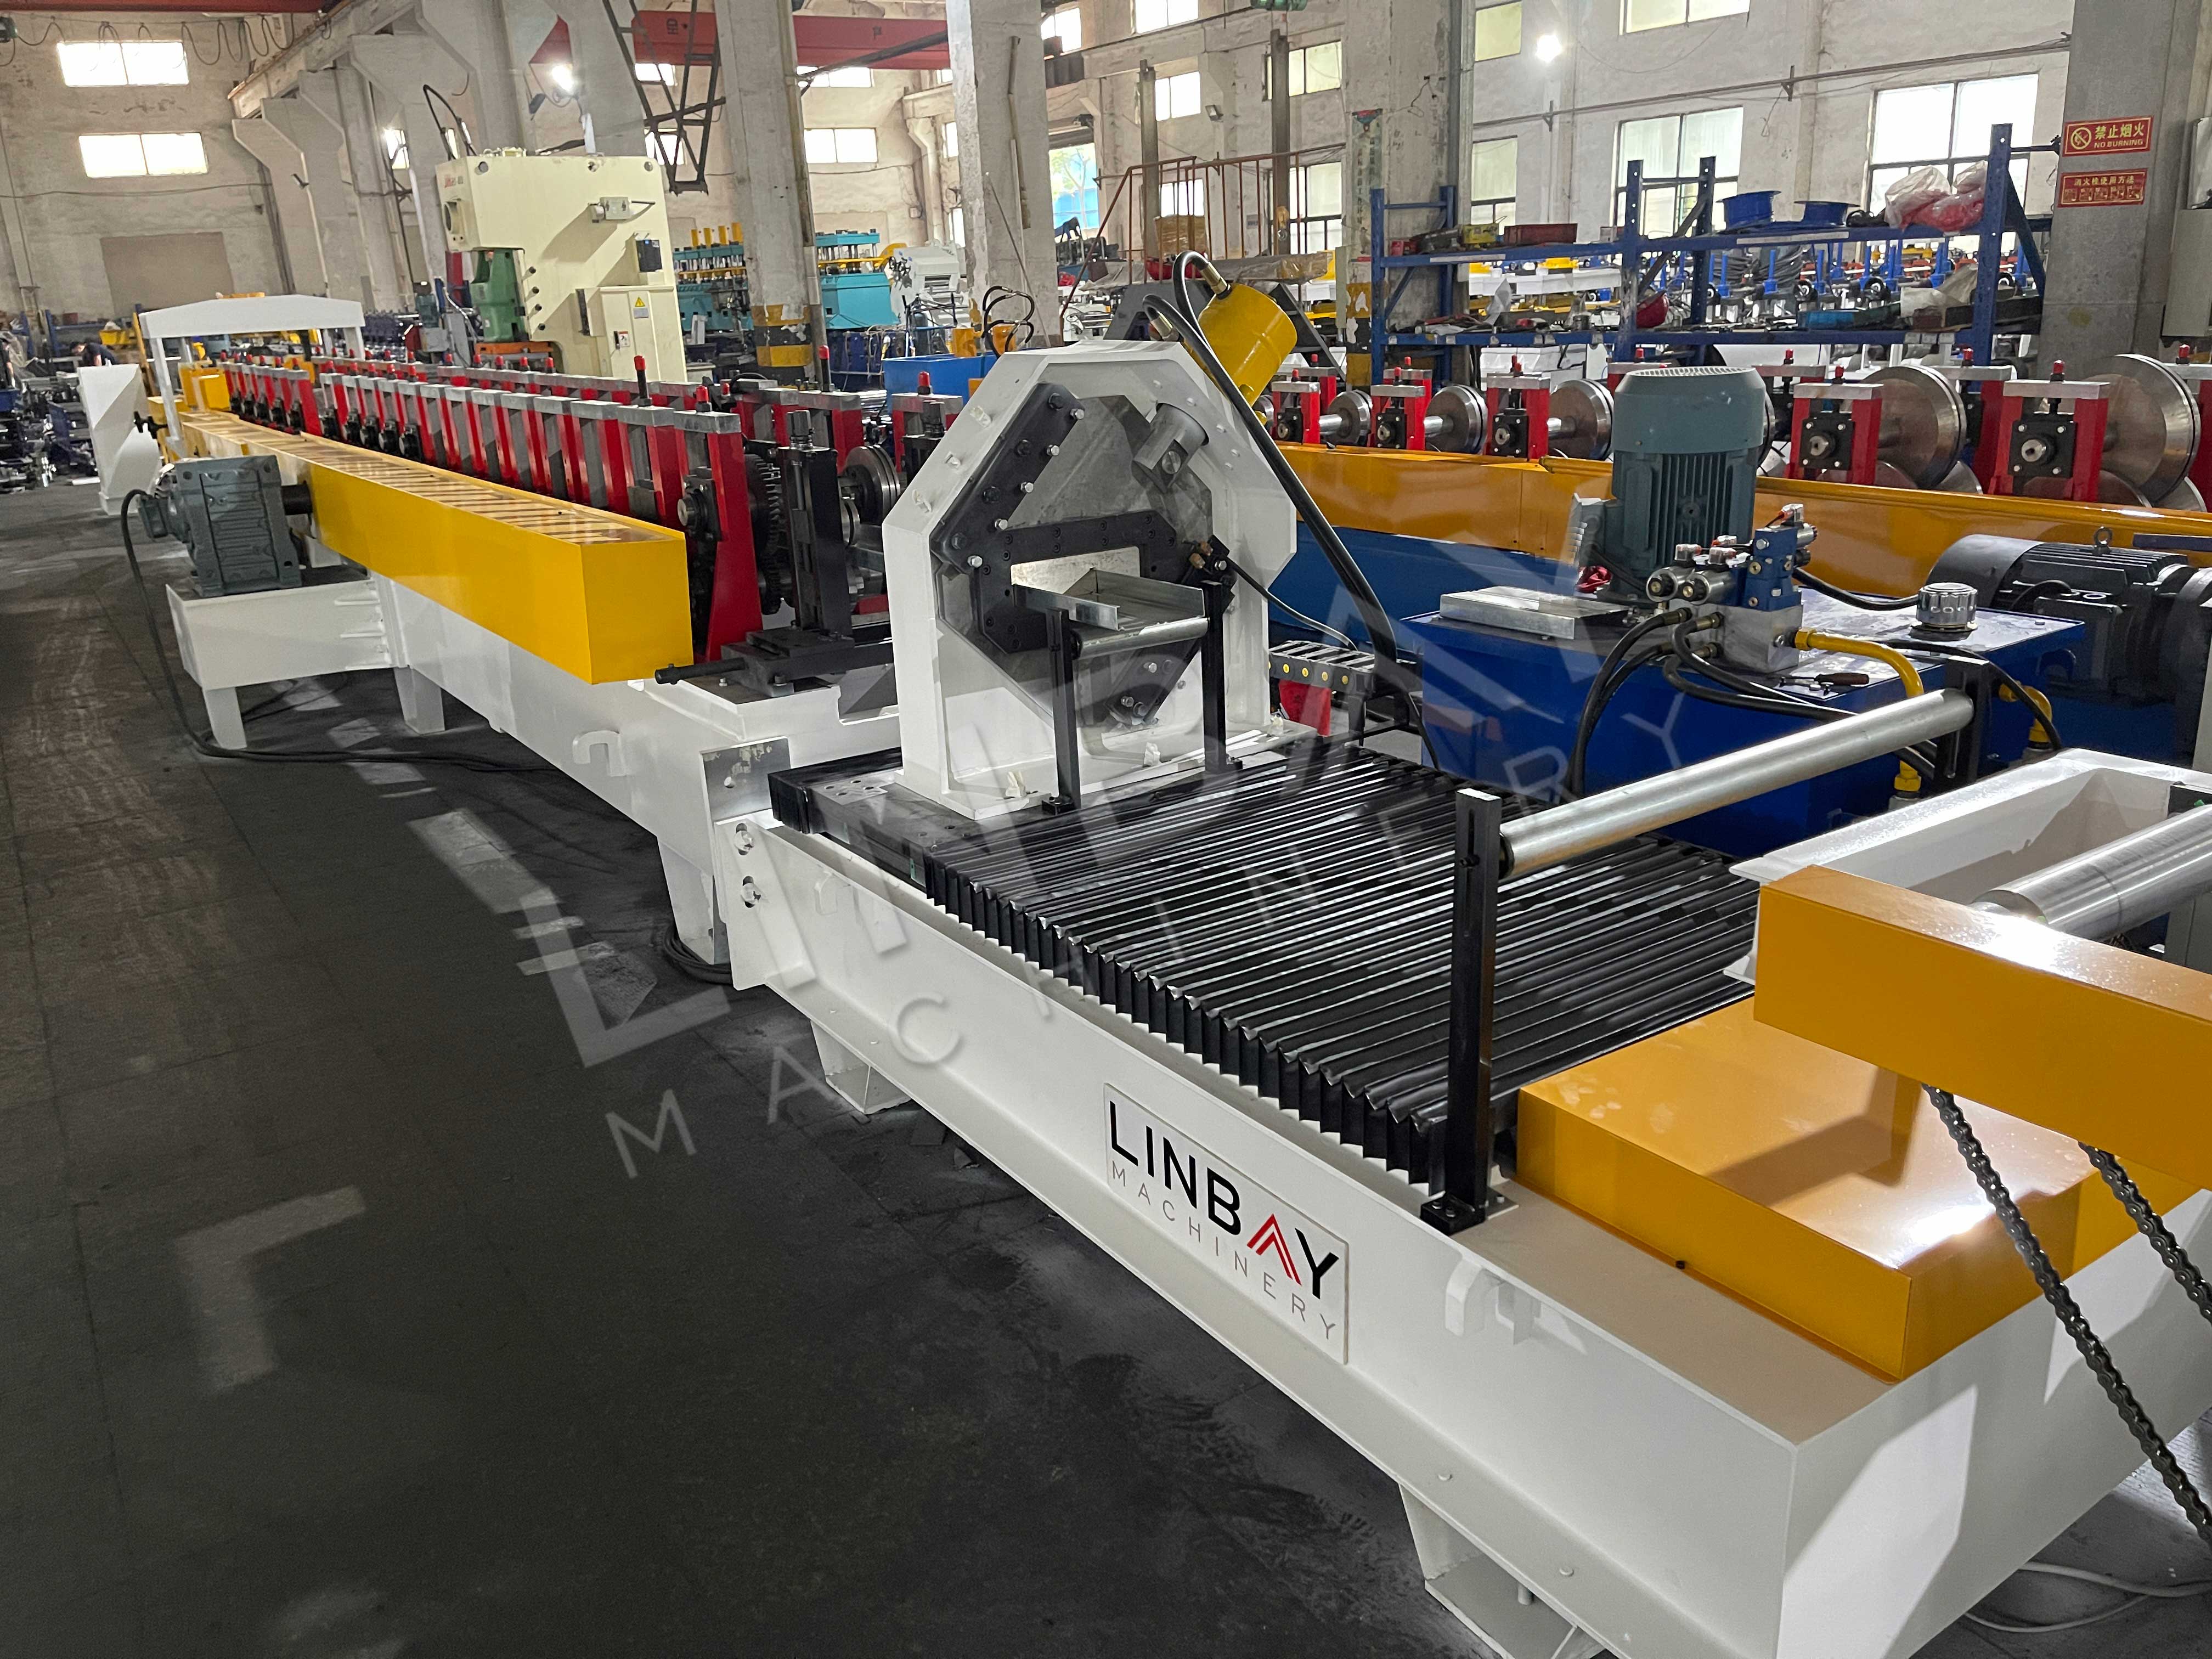 LINBAY-Exporta la Máquina Perfiladora de Racks Industriales a Vietnam